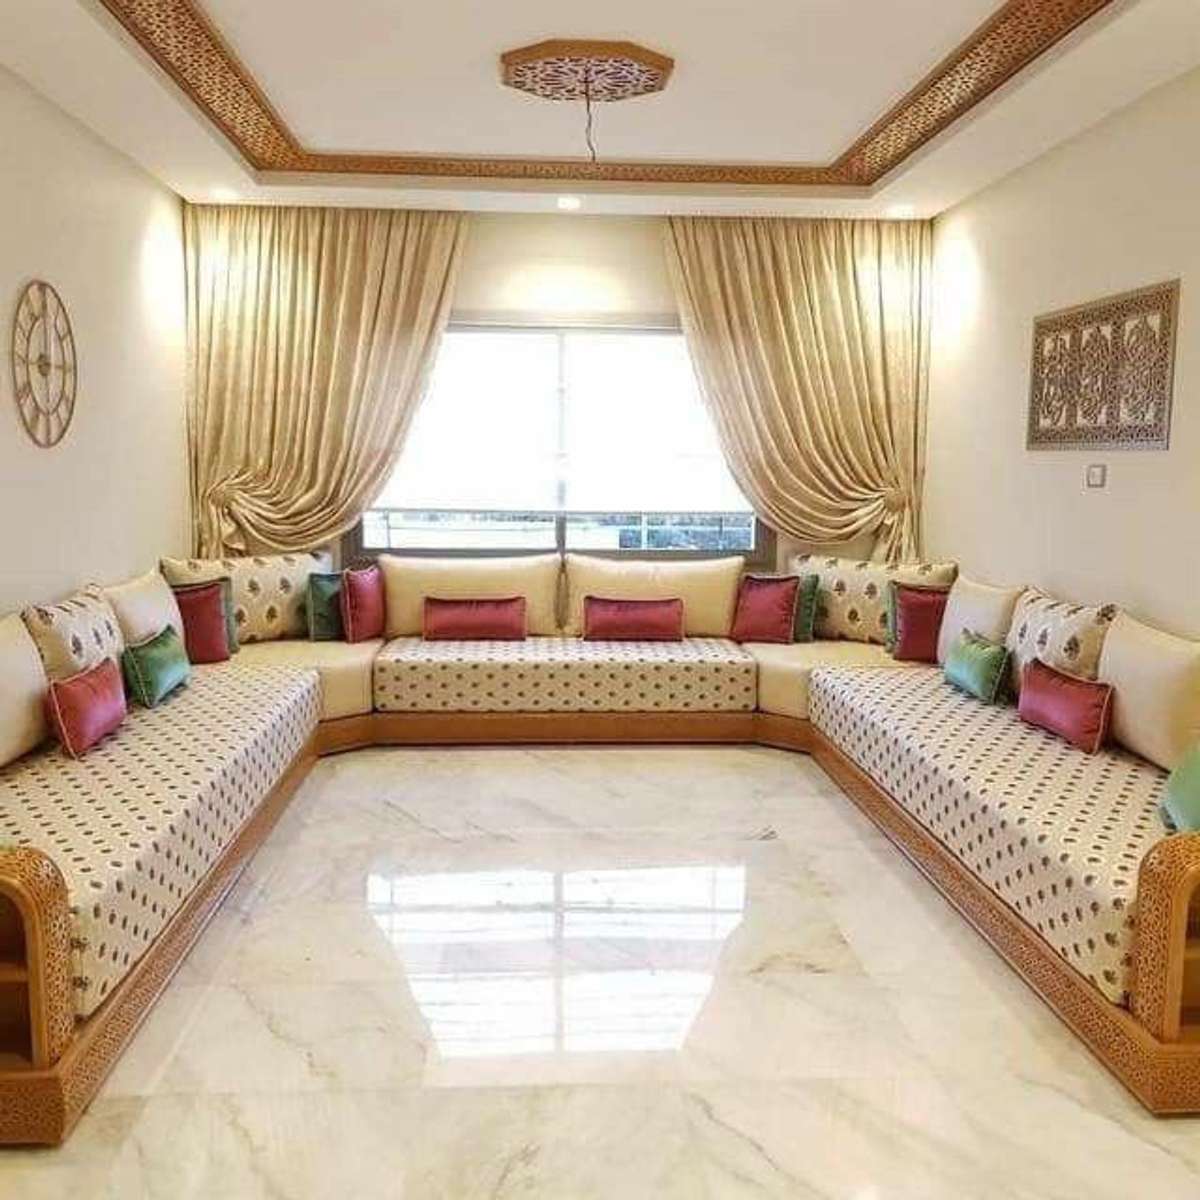 Living Room
 #LivingroomDesigns  #LivingRoomSofa  #LivingRoomCarpets  #2500sqftHouse  #LivingRoomPainting  #LivingRoomTV  #LivingRoomCeilingDesign   #LivingRoomInspiration  #LivingRoomWallPaper  #koło  #jaipurphotography  #ajmerroadhouse  #bhilwara_architect  #udaipur_architect  #delhiclub  #huda_inteior@delhiintri  #delhi_house_design